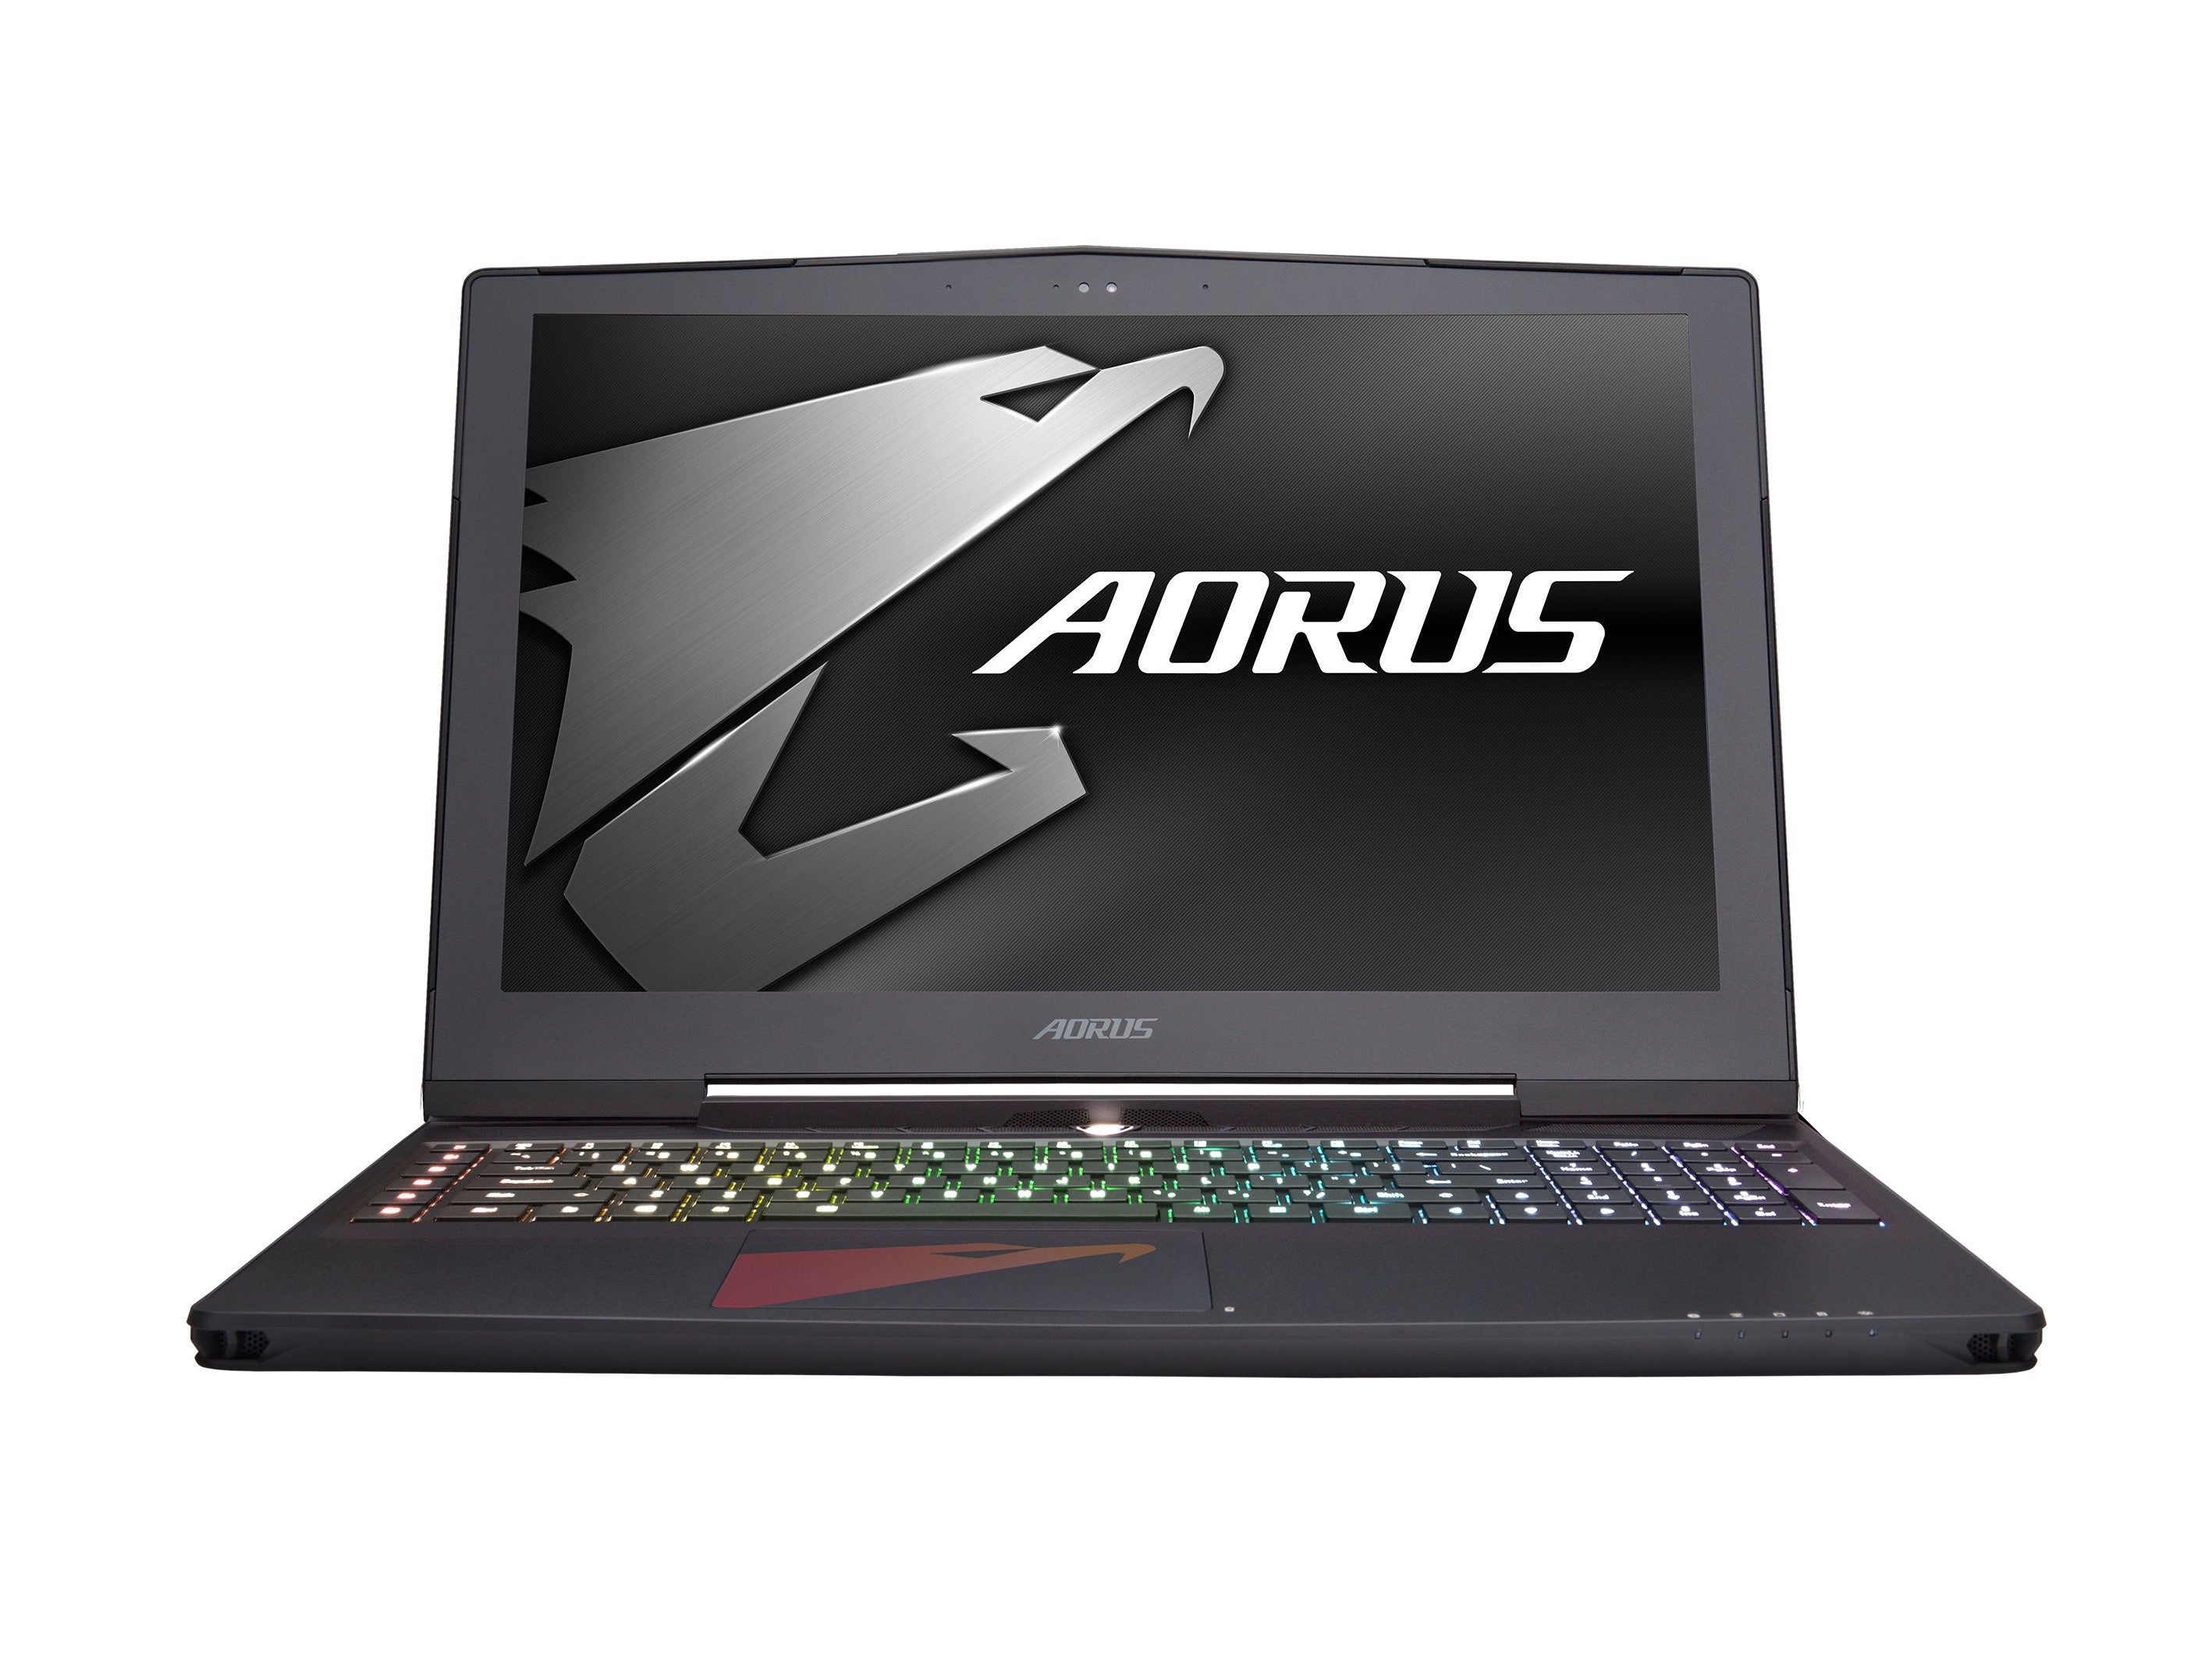 Gigabyte Aorus X5 1080 701S 15.6inch Laptop